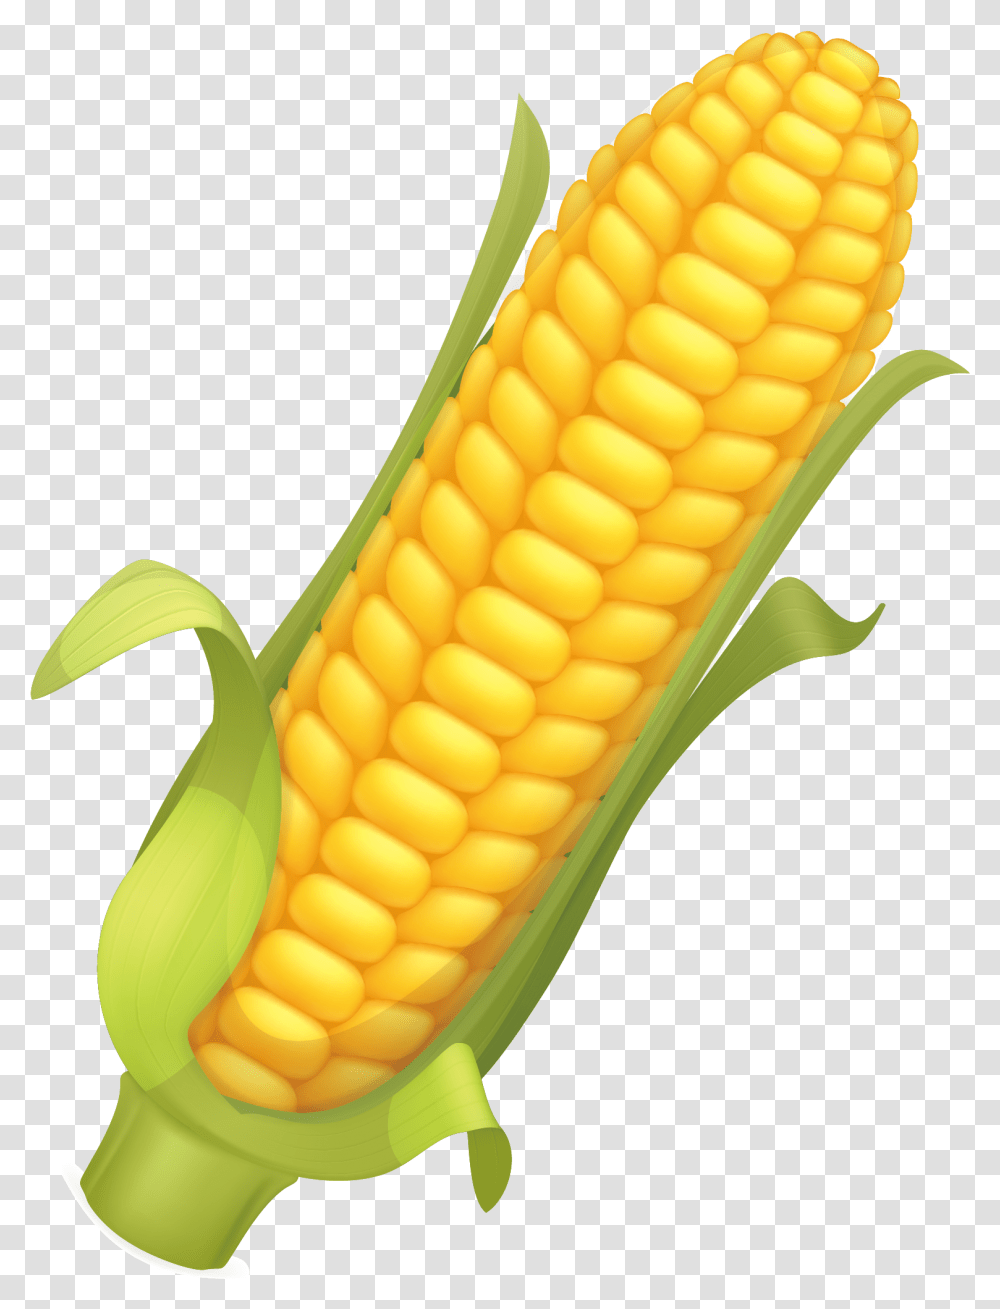 Corn Flakes Maize Corncob Side Dish Image Corncob, Plant, Vegetable, Food, Spoon Transparent Png